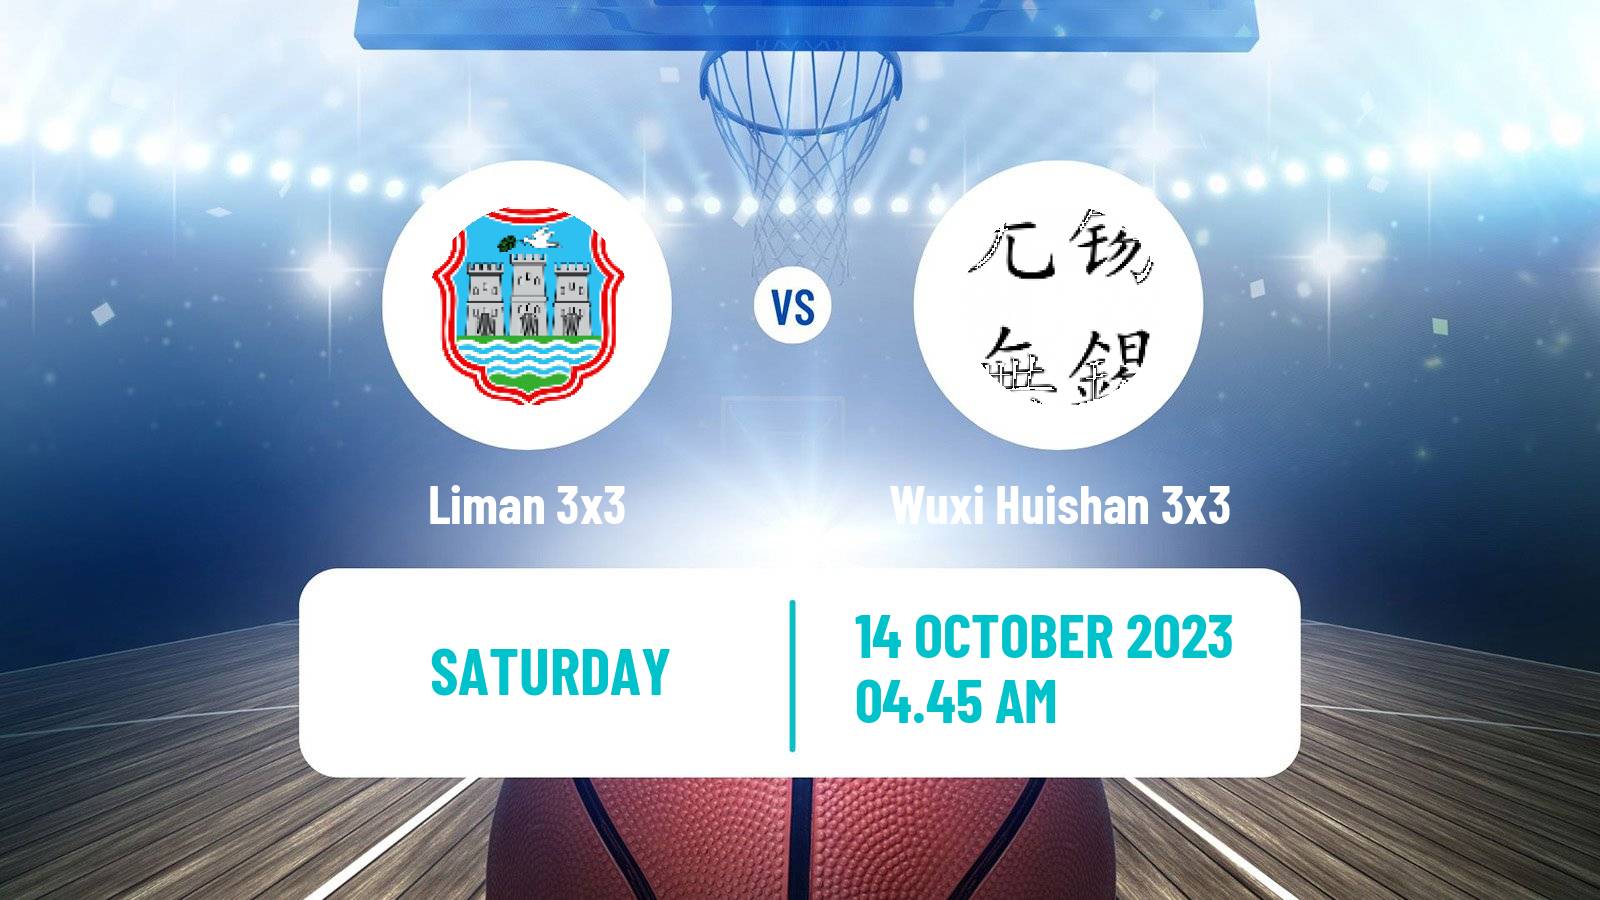 Basketball World Tour Shanghai 3x3 Liman 3x3 - Wuxi Huishan 3x3